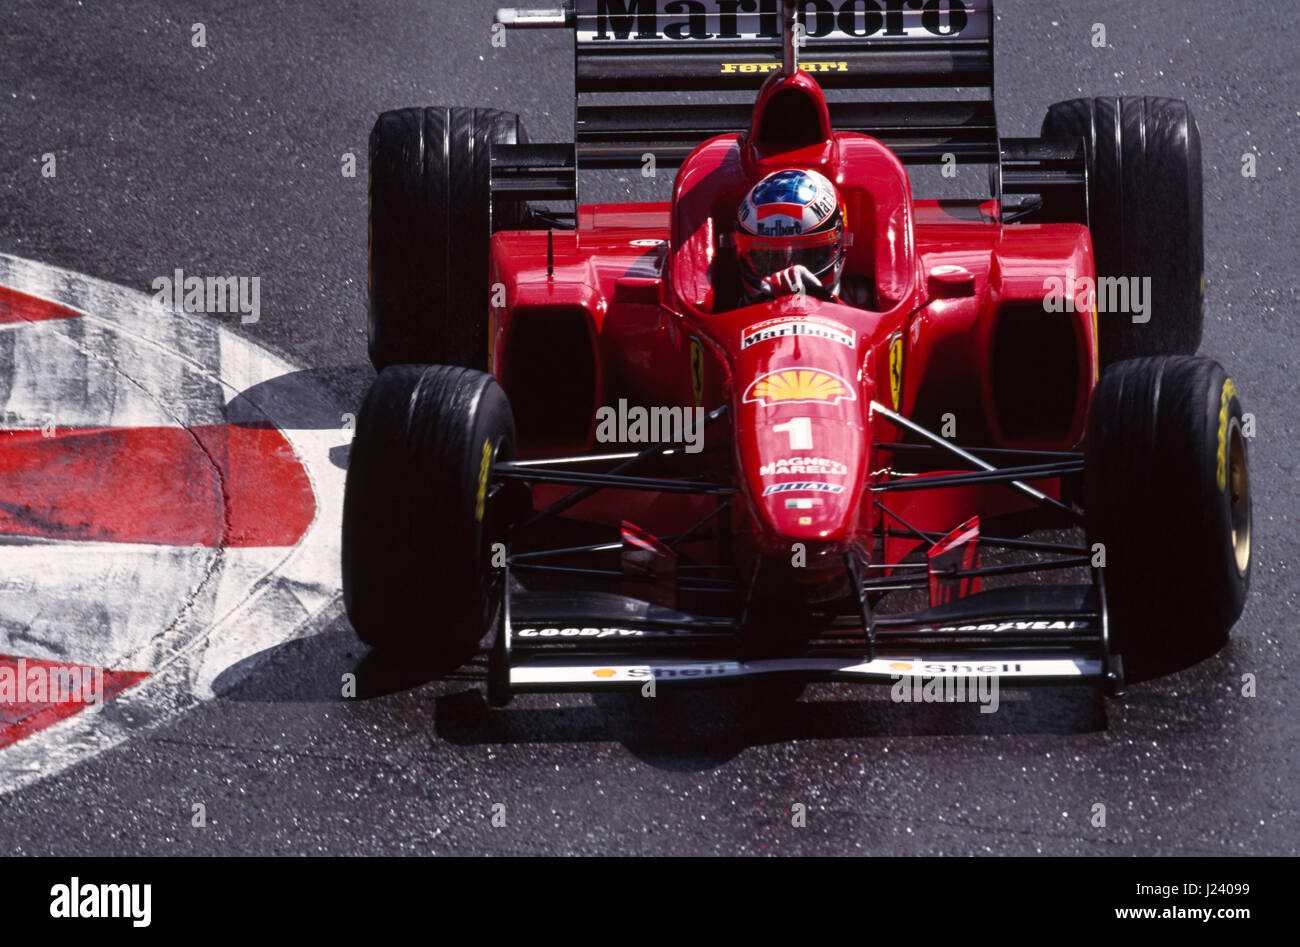 F1, Ferrari, Michael Schumacher, Gp Monaco 1995 Stock Photo